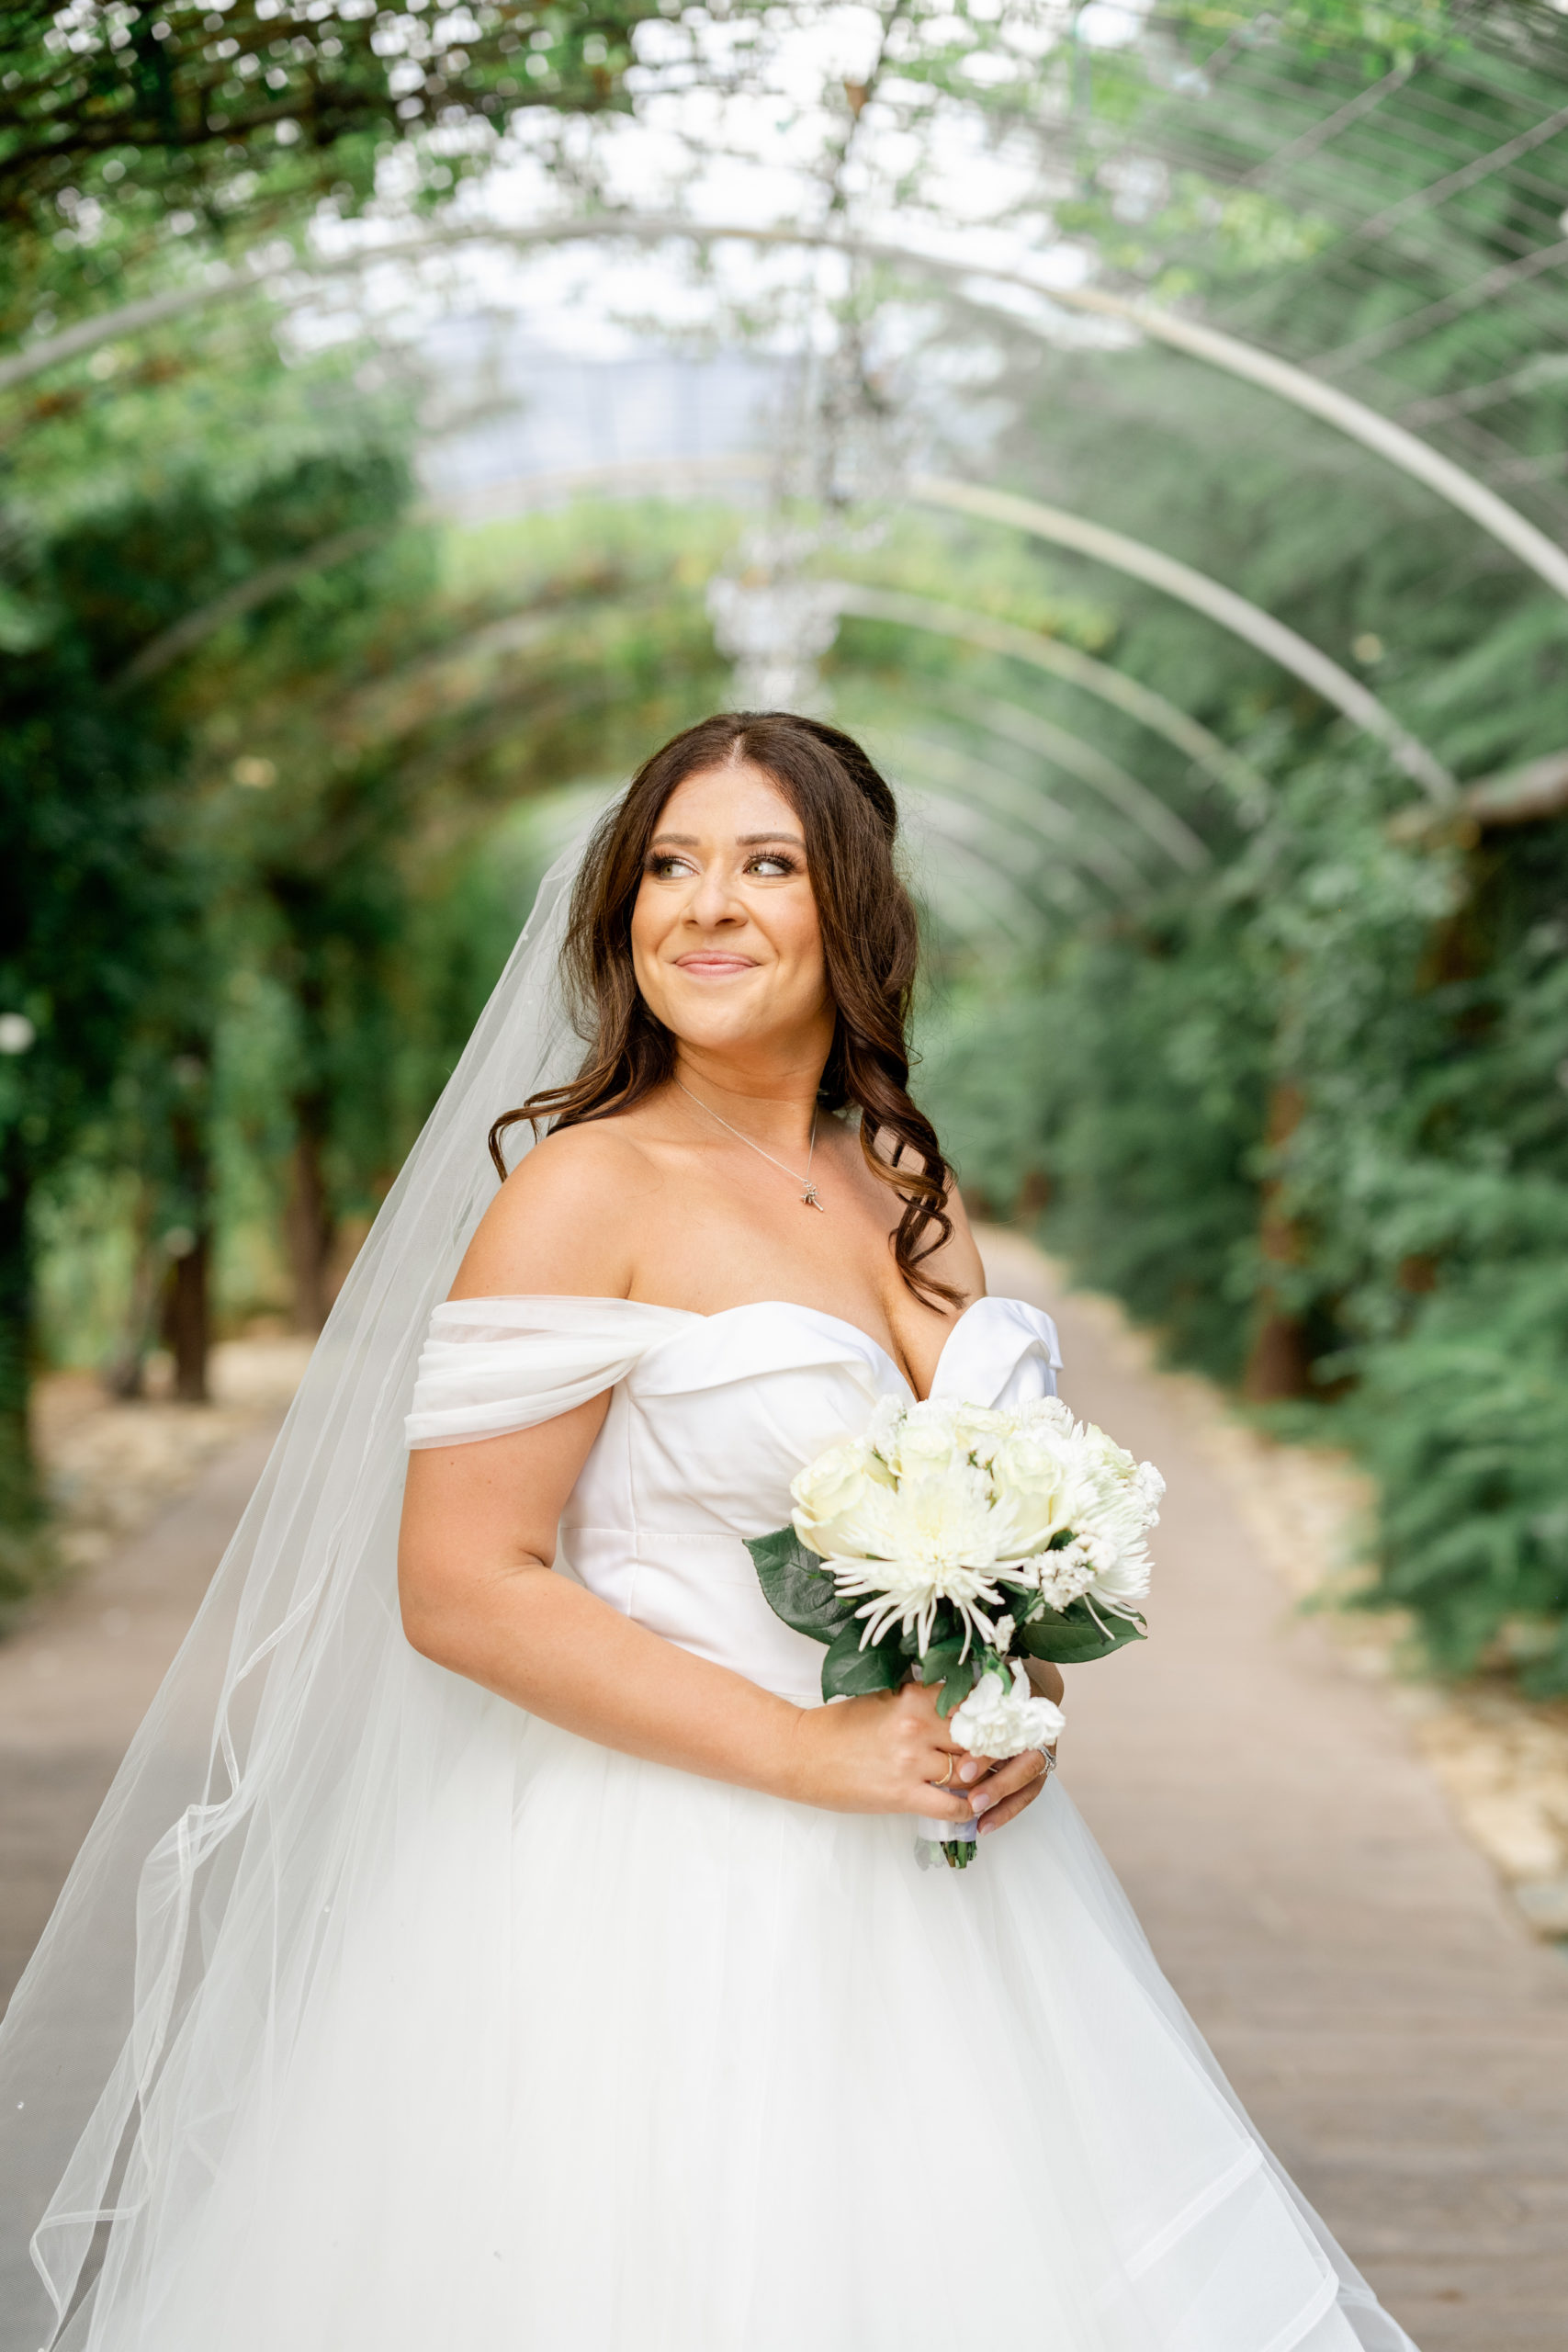 Bride holding flowers at garden